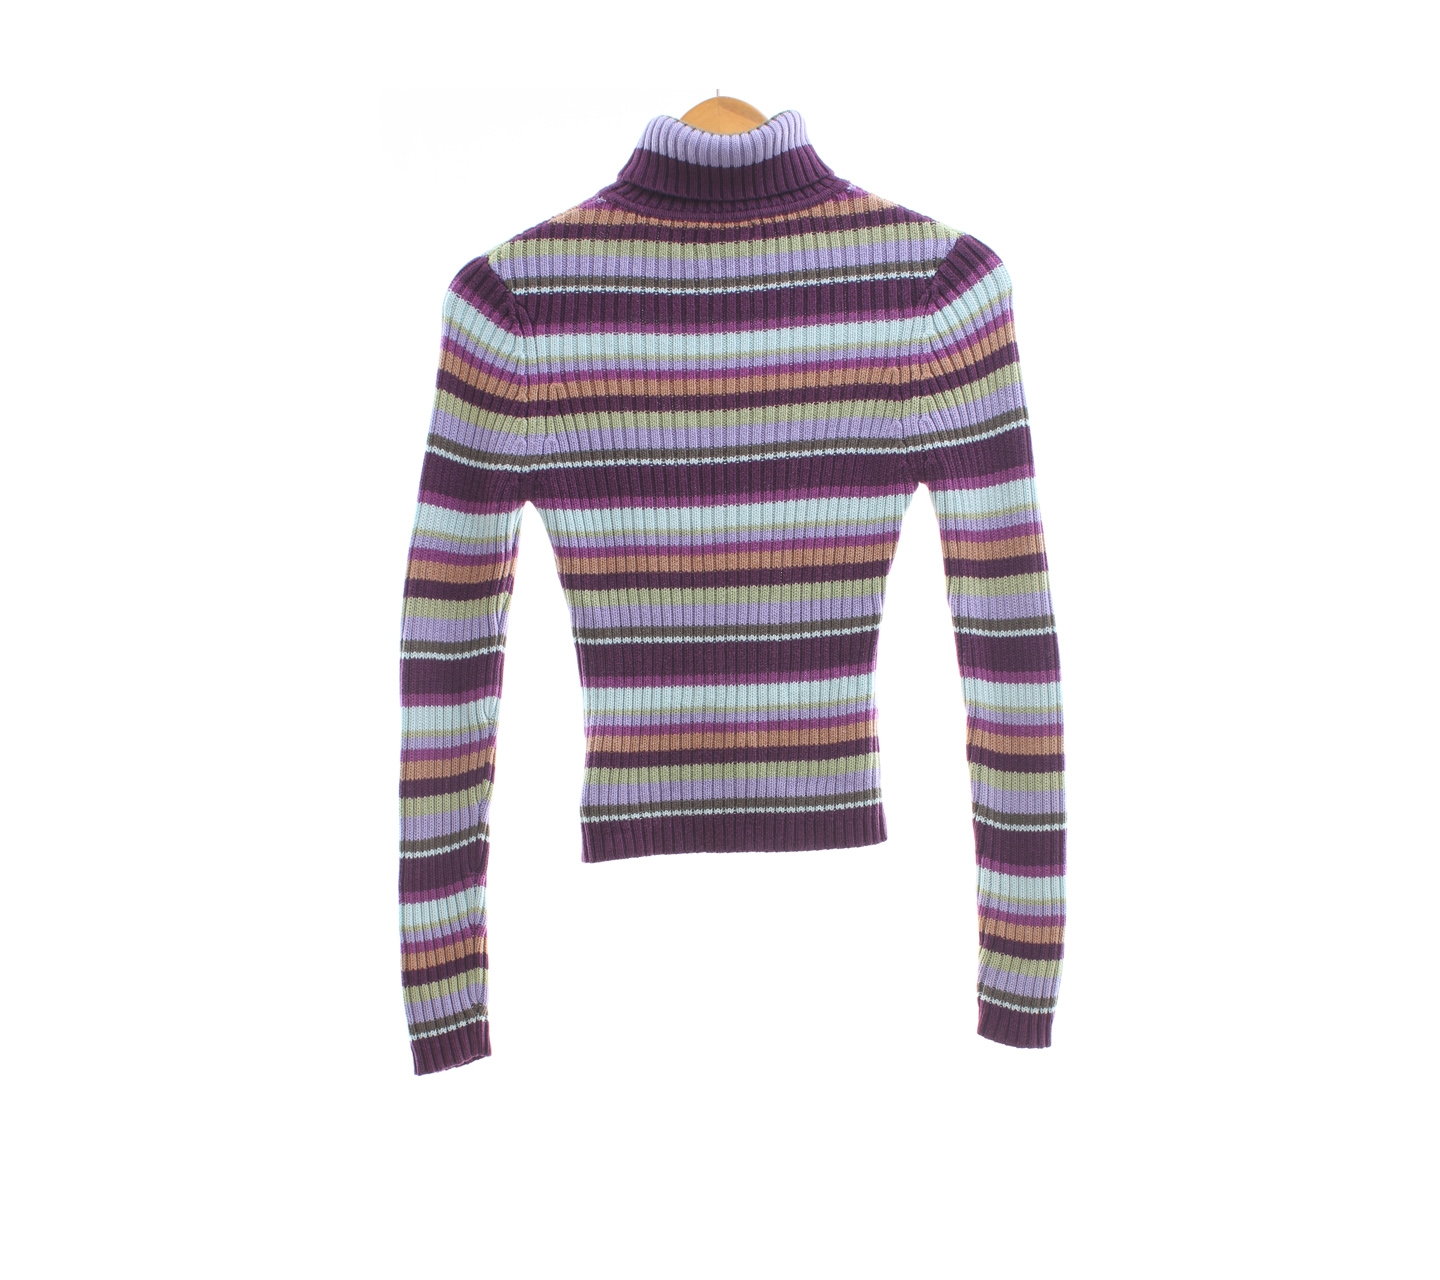 Guess Multicolor Striped Sweater